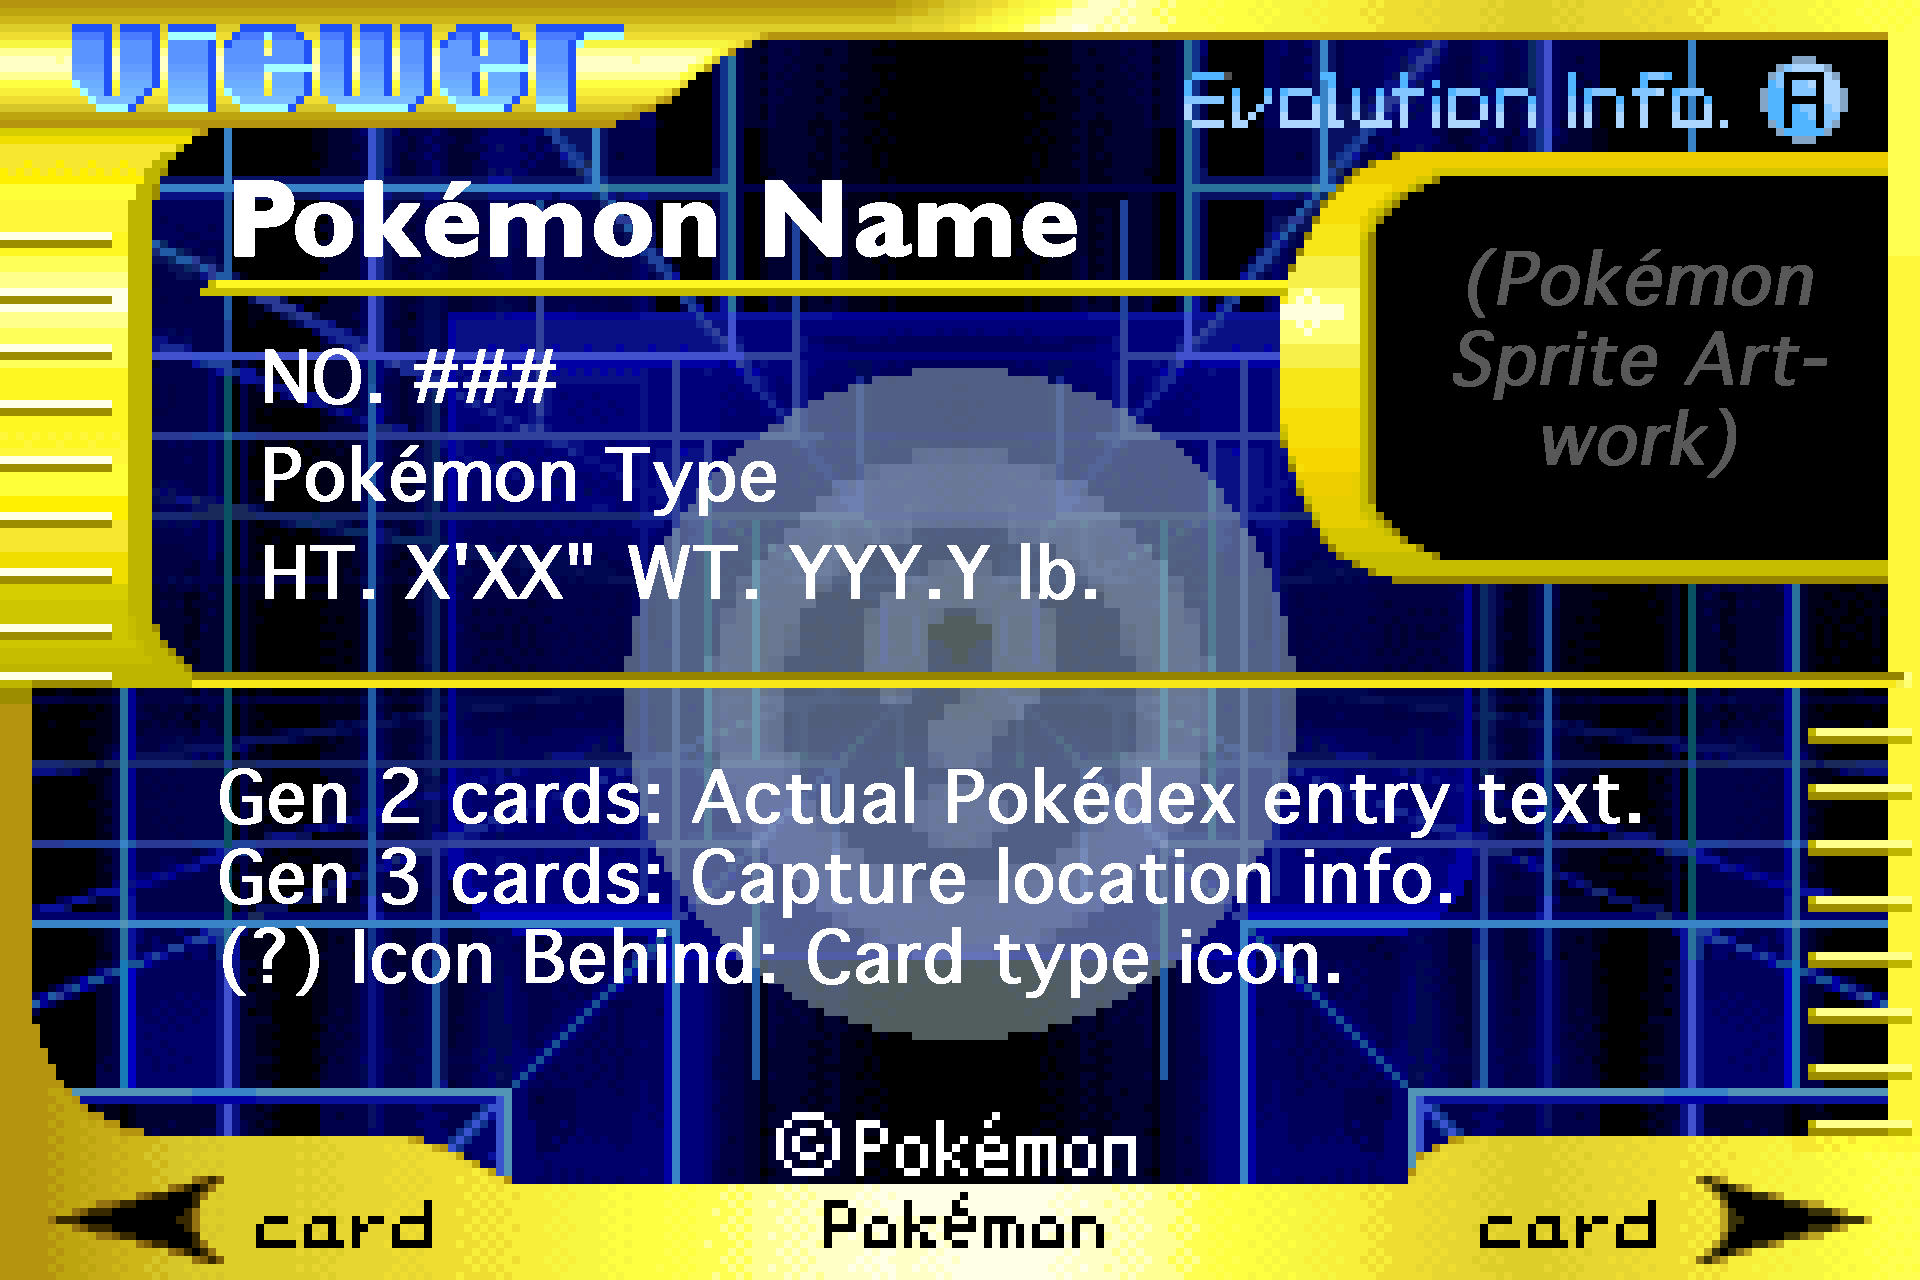 Pokedex Hoenn for a Pokemon Card